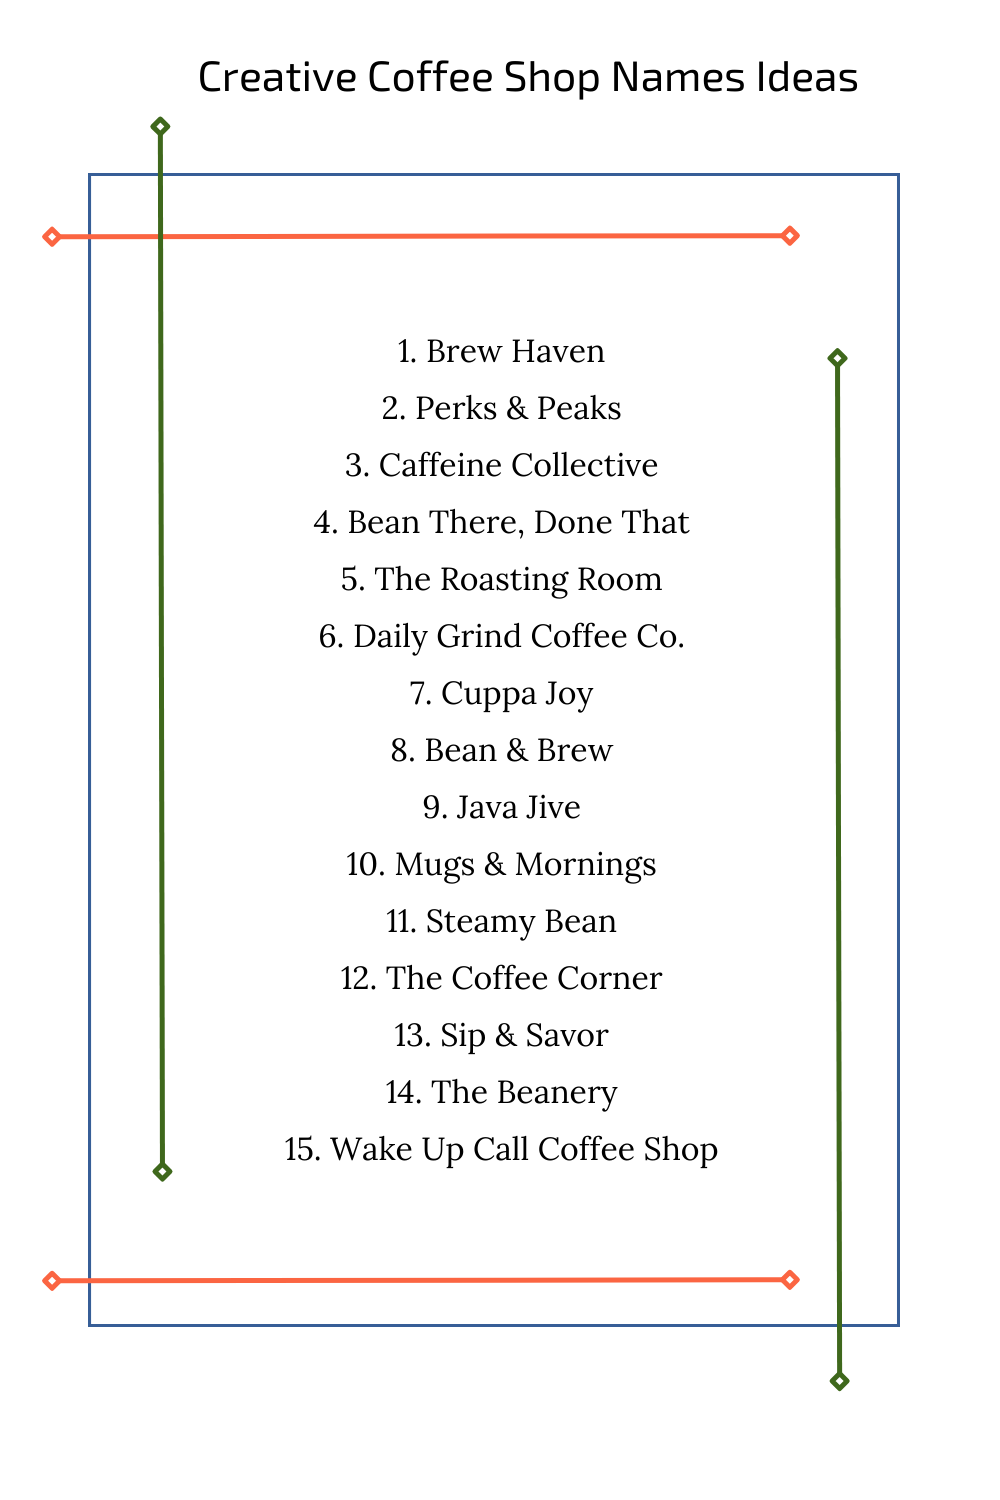 Creative Coffee Shop Names Ideas